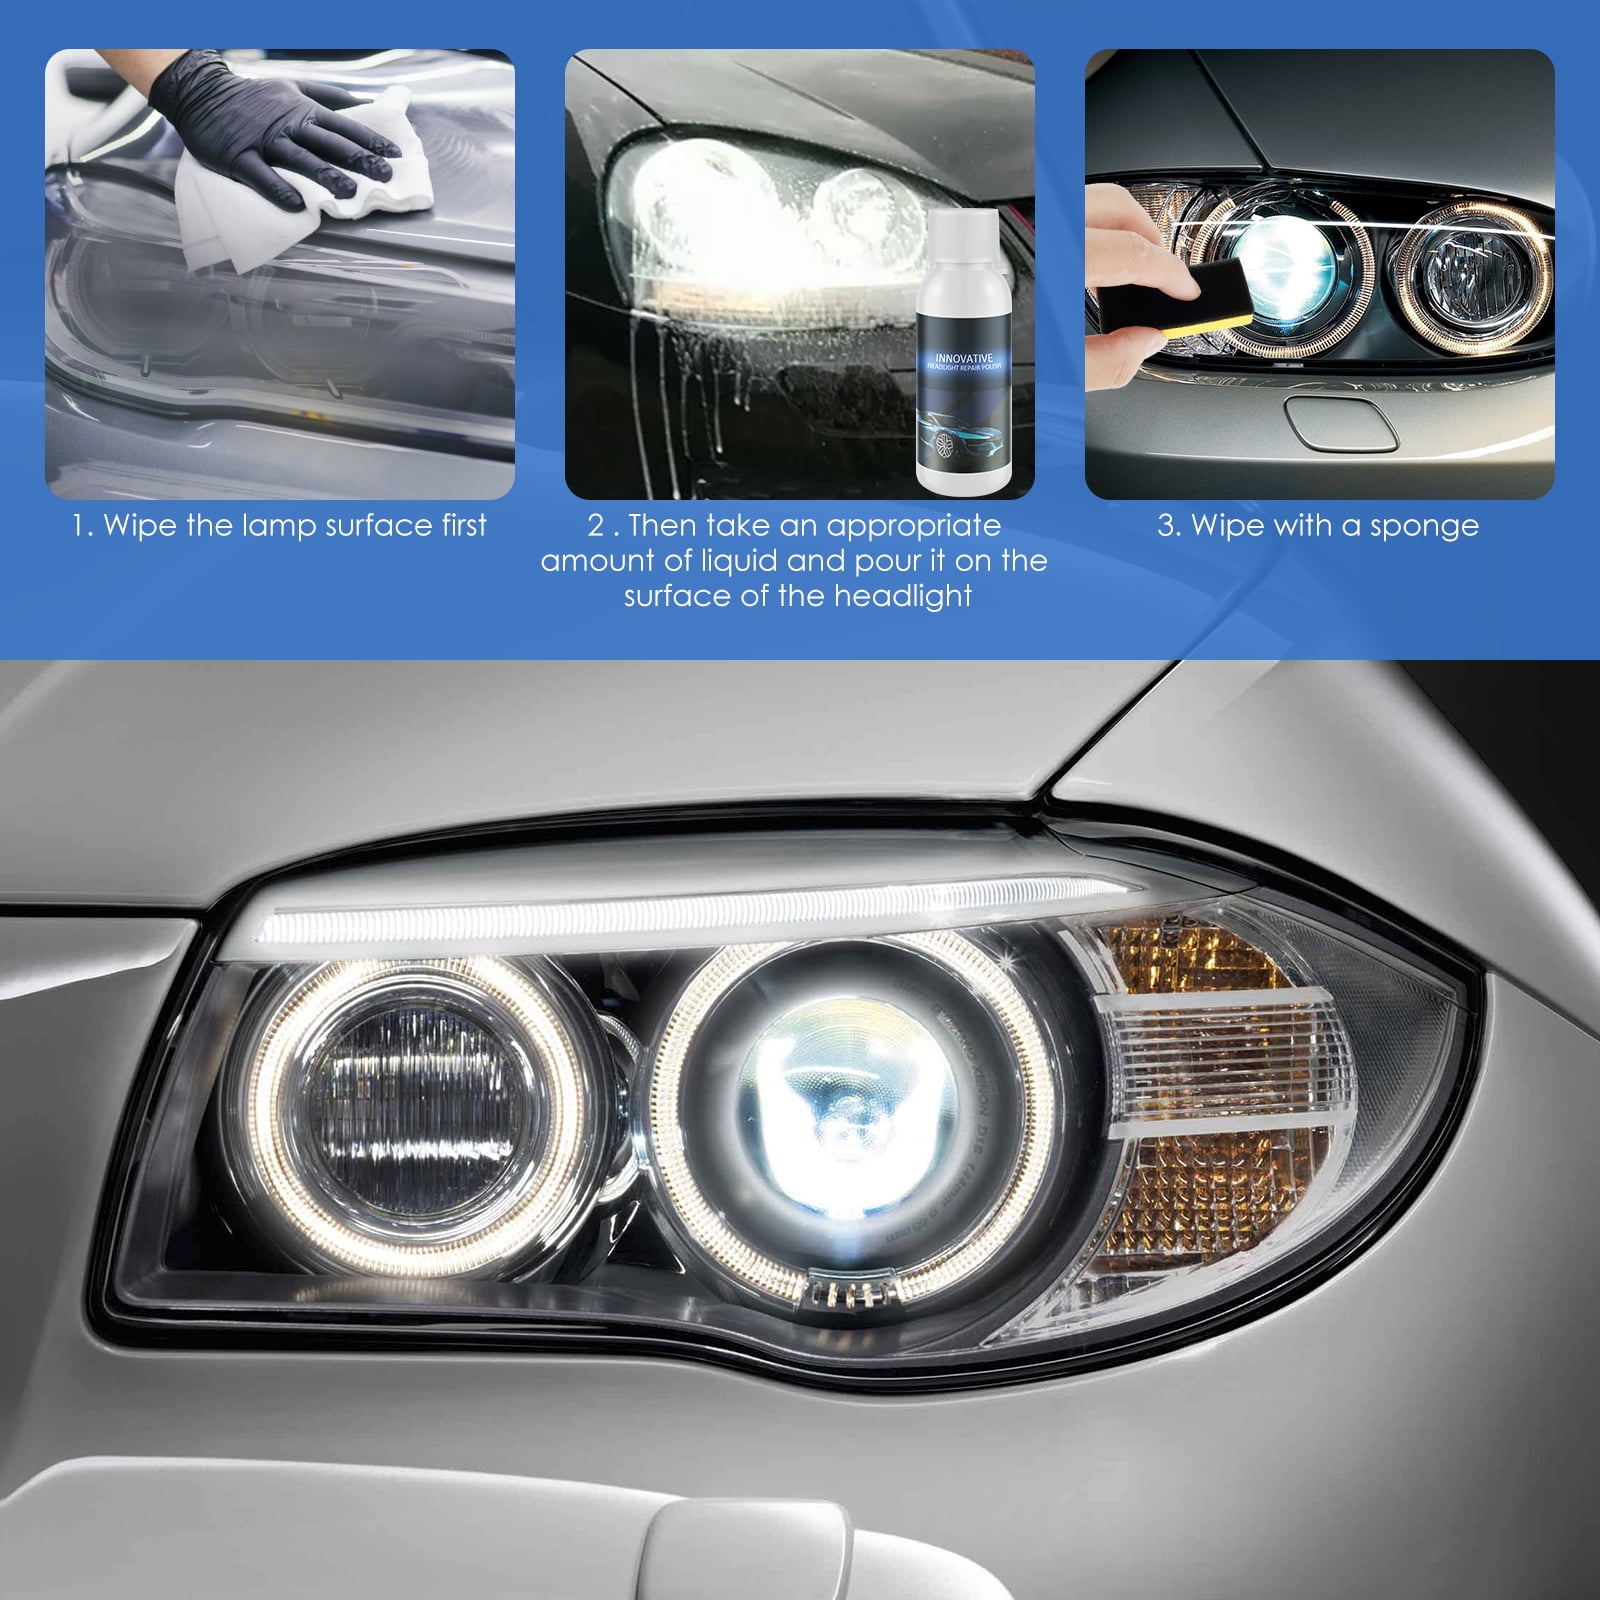 Welpettie Innovative Headlight Repair Polish, Car Headlight Repair Fluid, Car Headlight Cleaner (30 mL,2 Pcs), Size: 7291.3, Clear